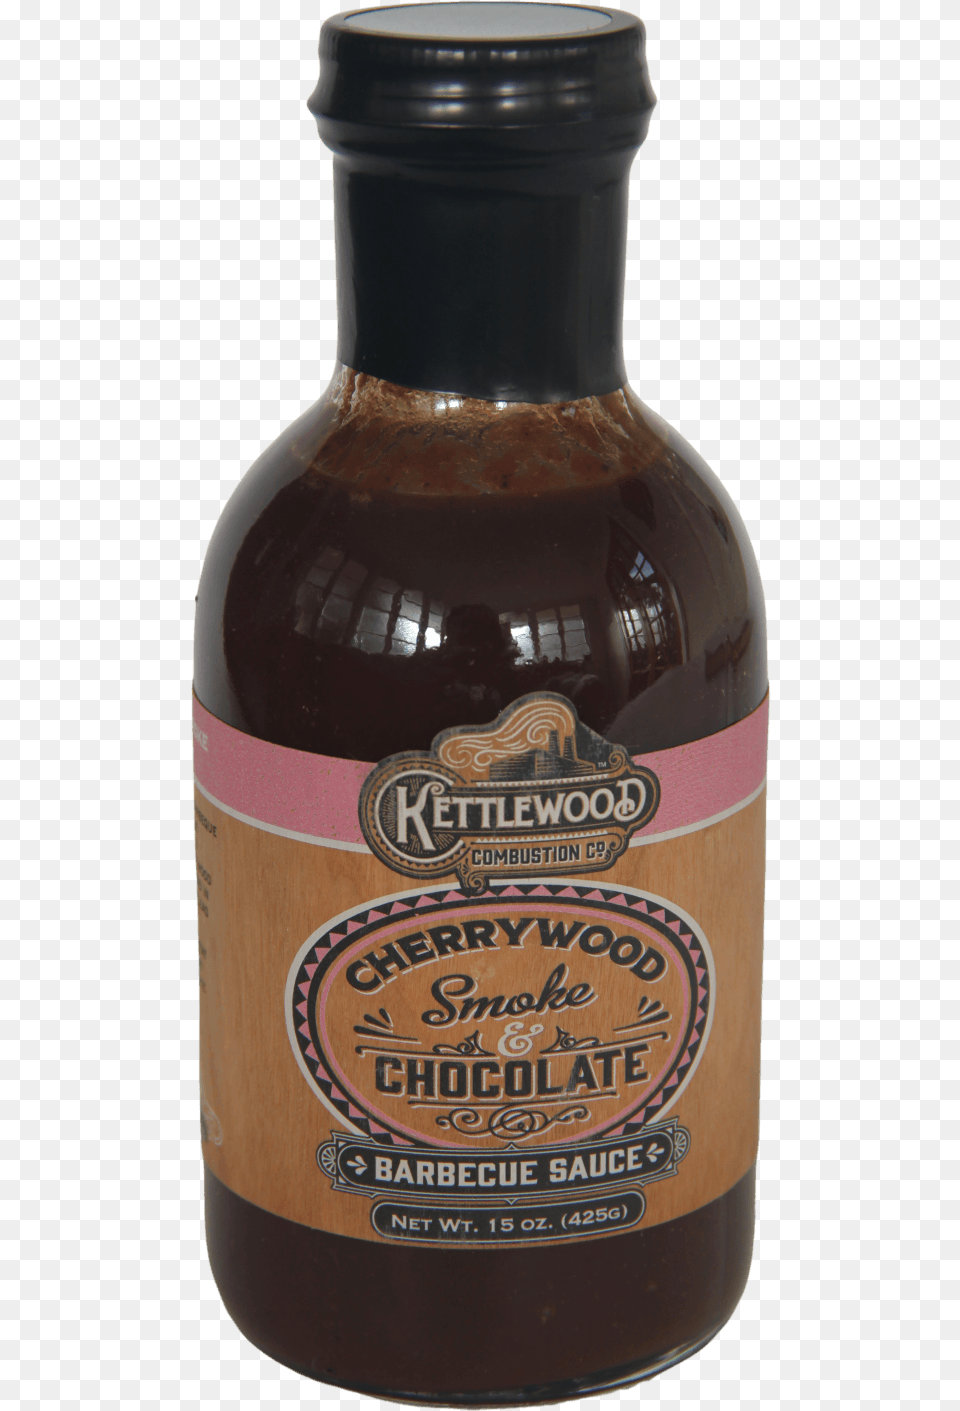 Kettlewood Cherrywood Smoke Amp Chocolate Bbq Sauce 425g Glass Bottle, Alcohol, Beer, Beverage, Beer Bottle Free Png